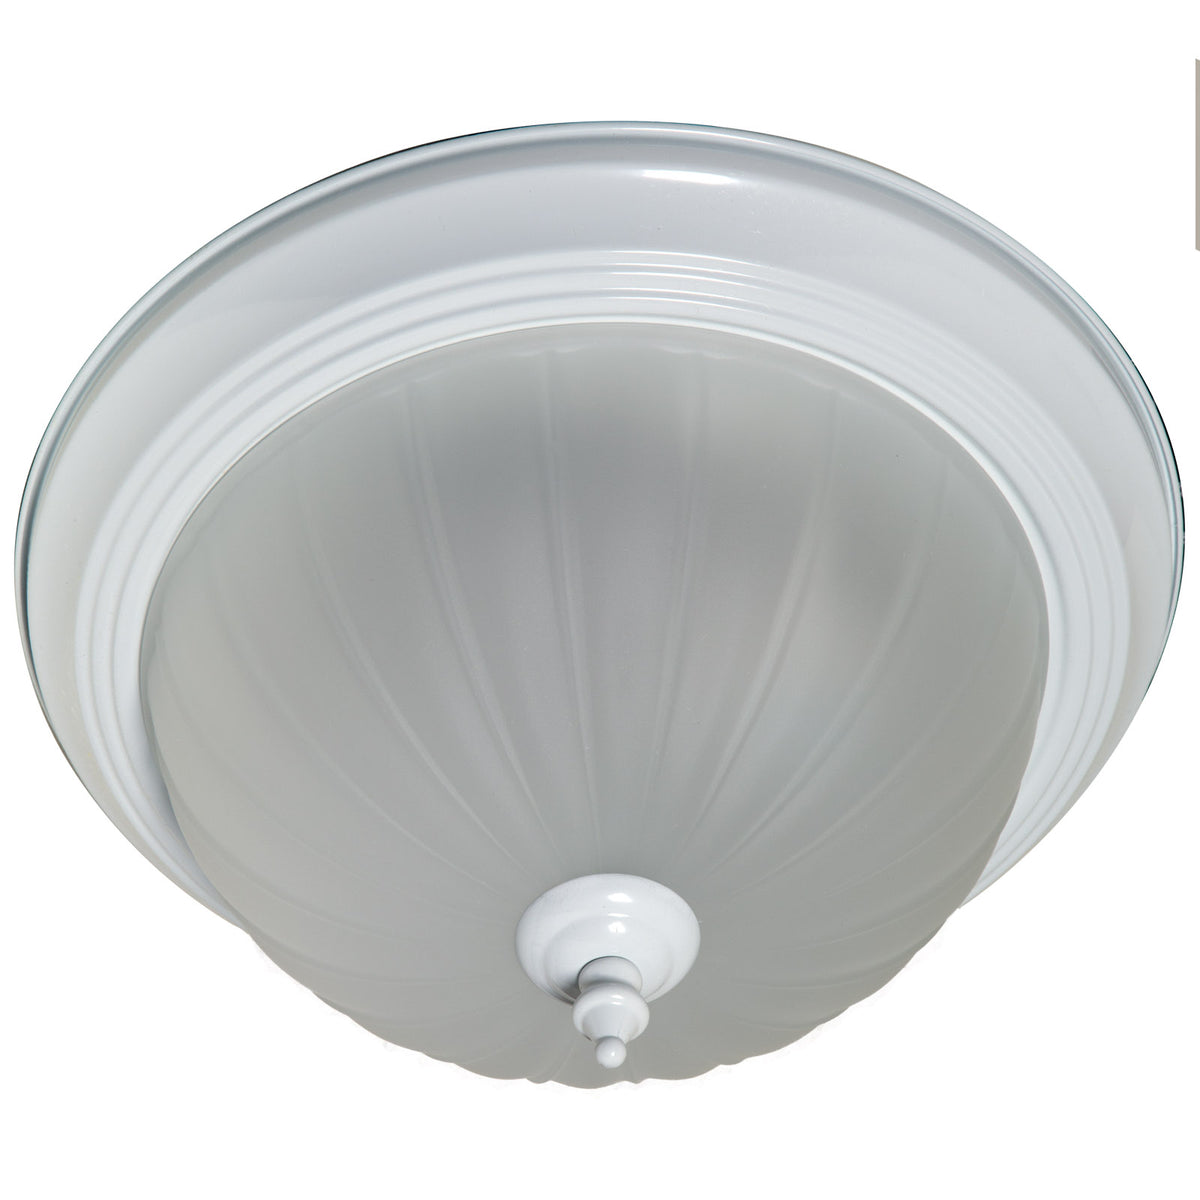 buy ceiling light fixtures at cheap rate in bulk. wholesale & retail lamps & light fixtures store. home décor ideas, maintenance, repair replacement parts